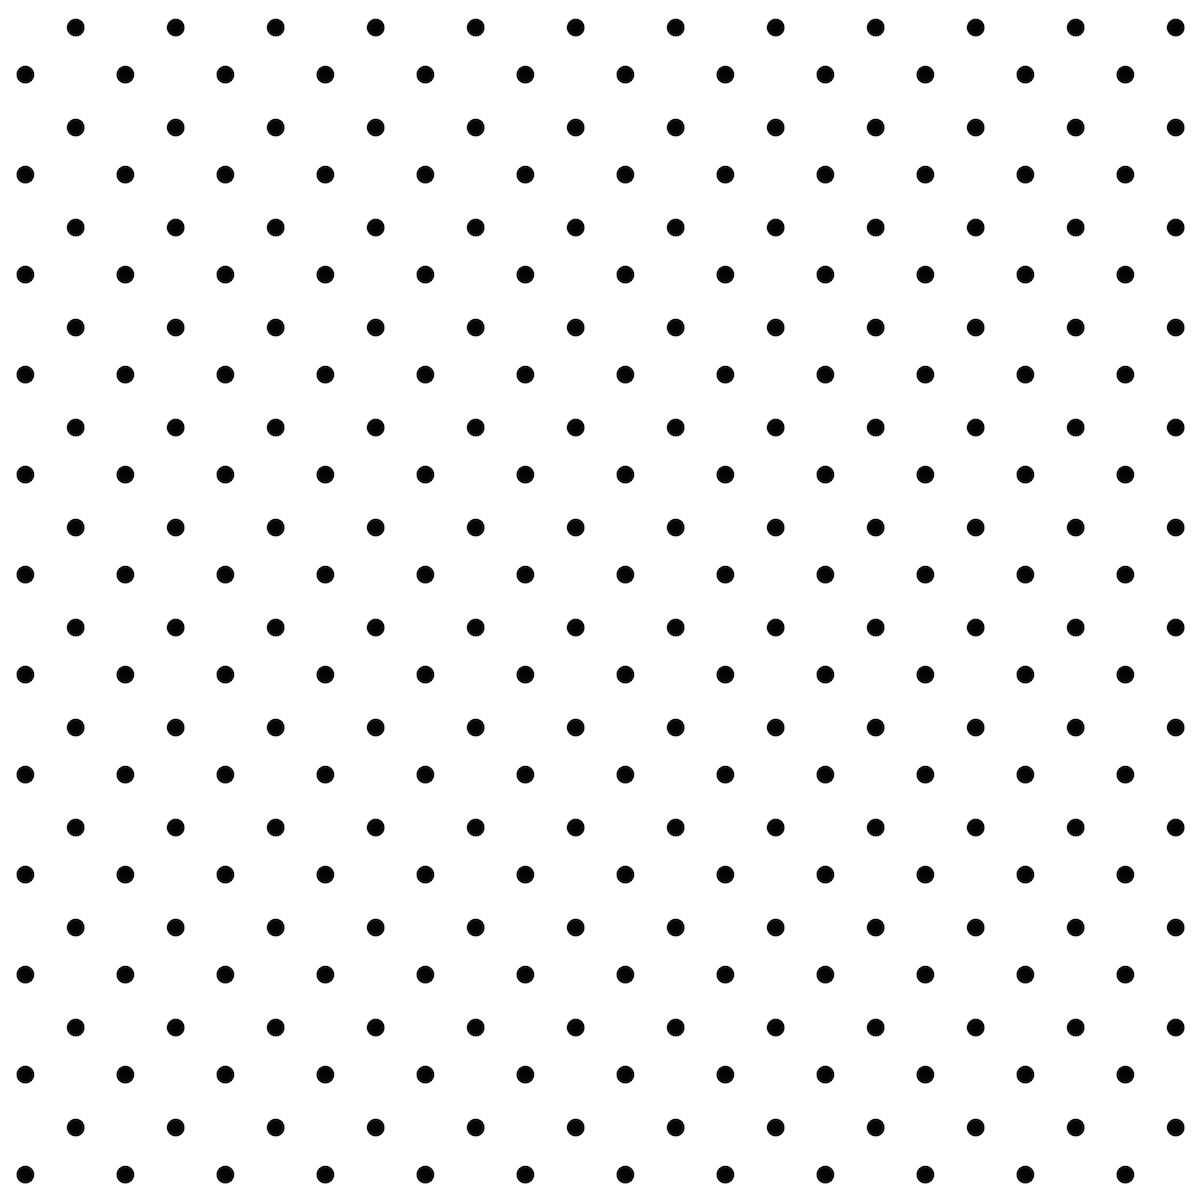 17-pock-a-dots-paper-border-designs-images-cute-blue-polka-dot